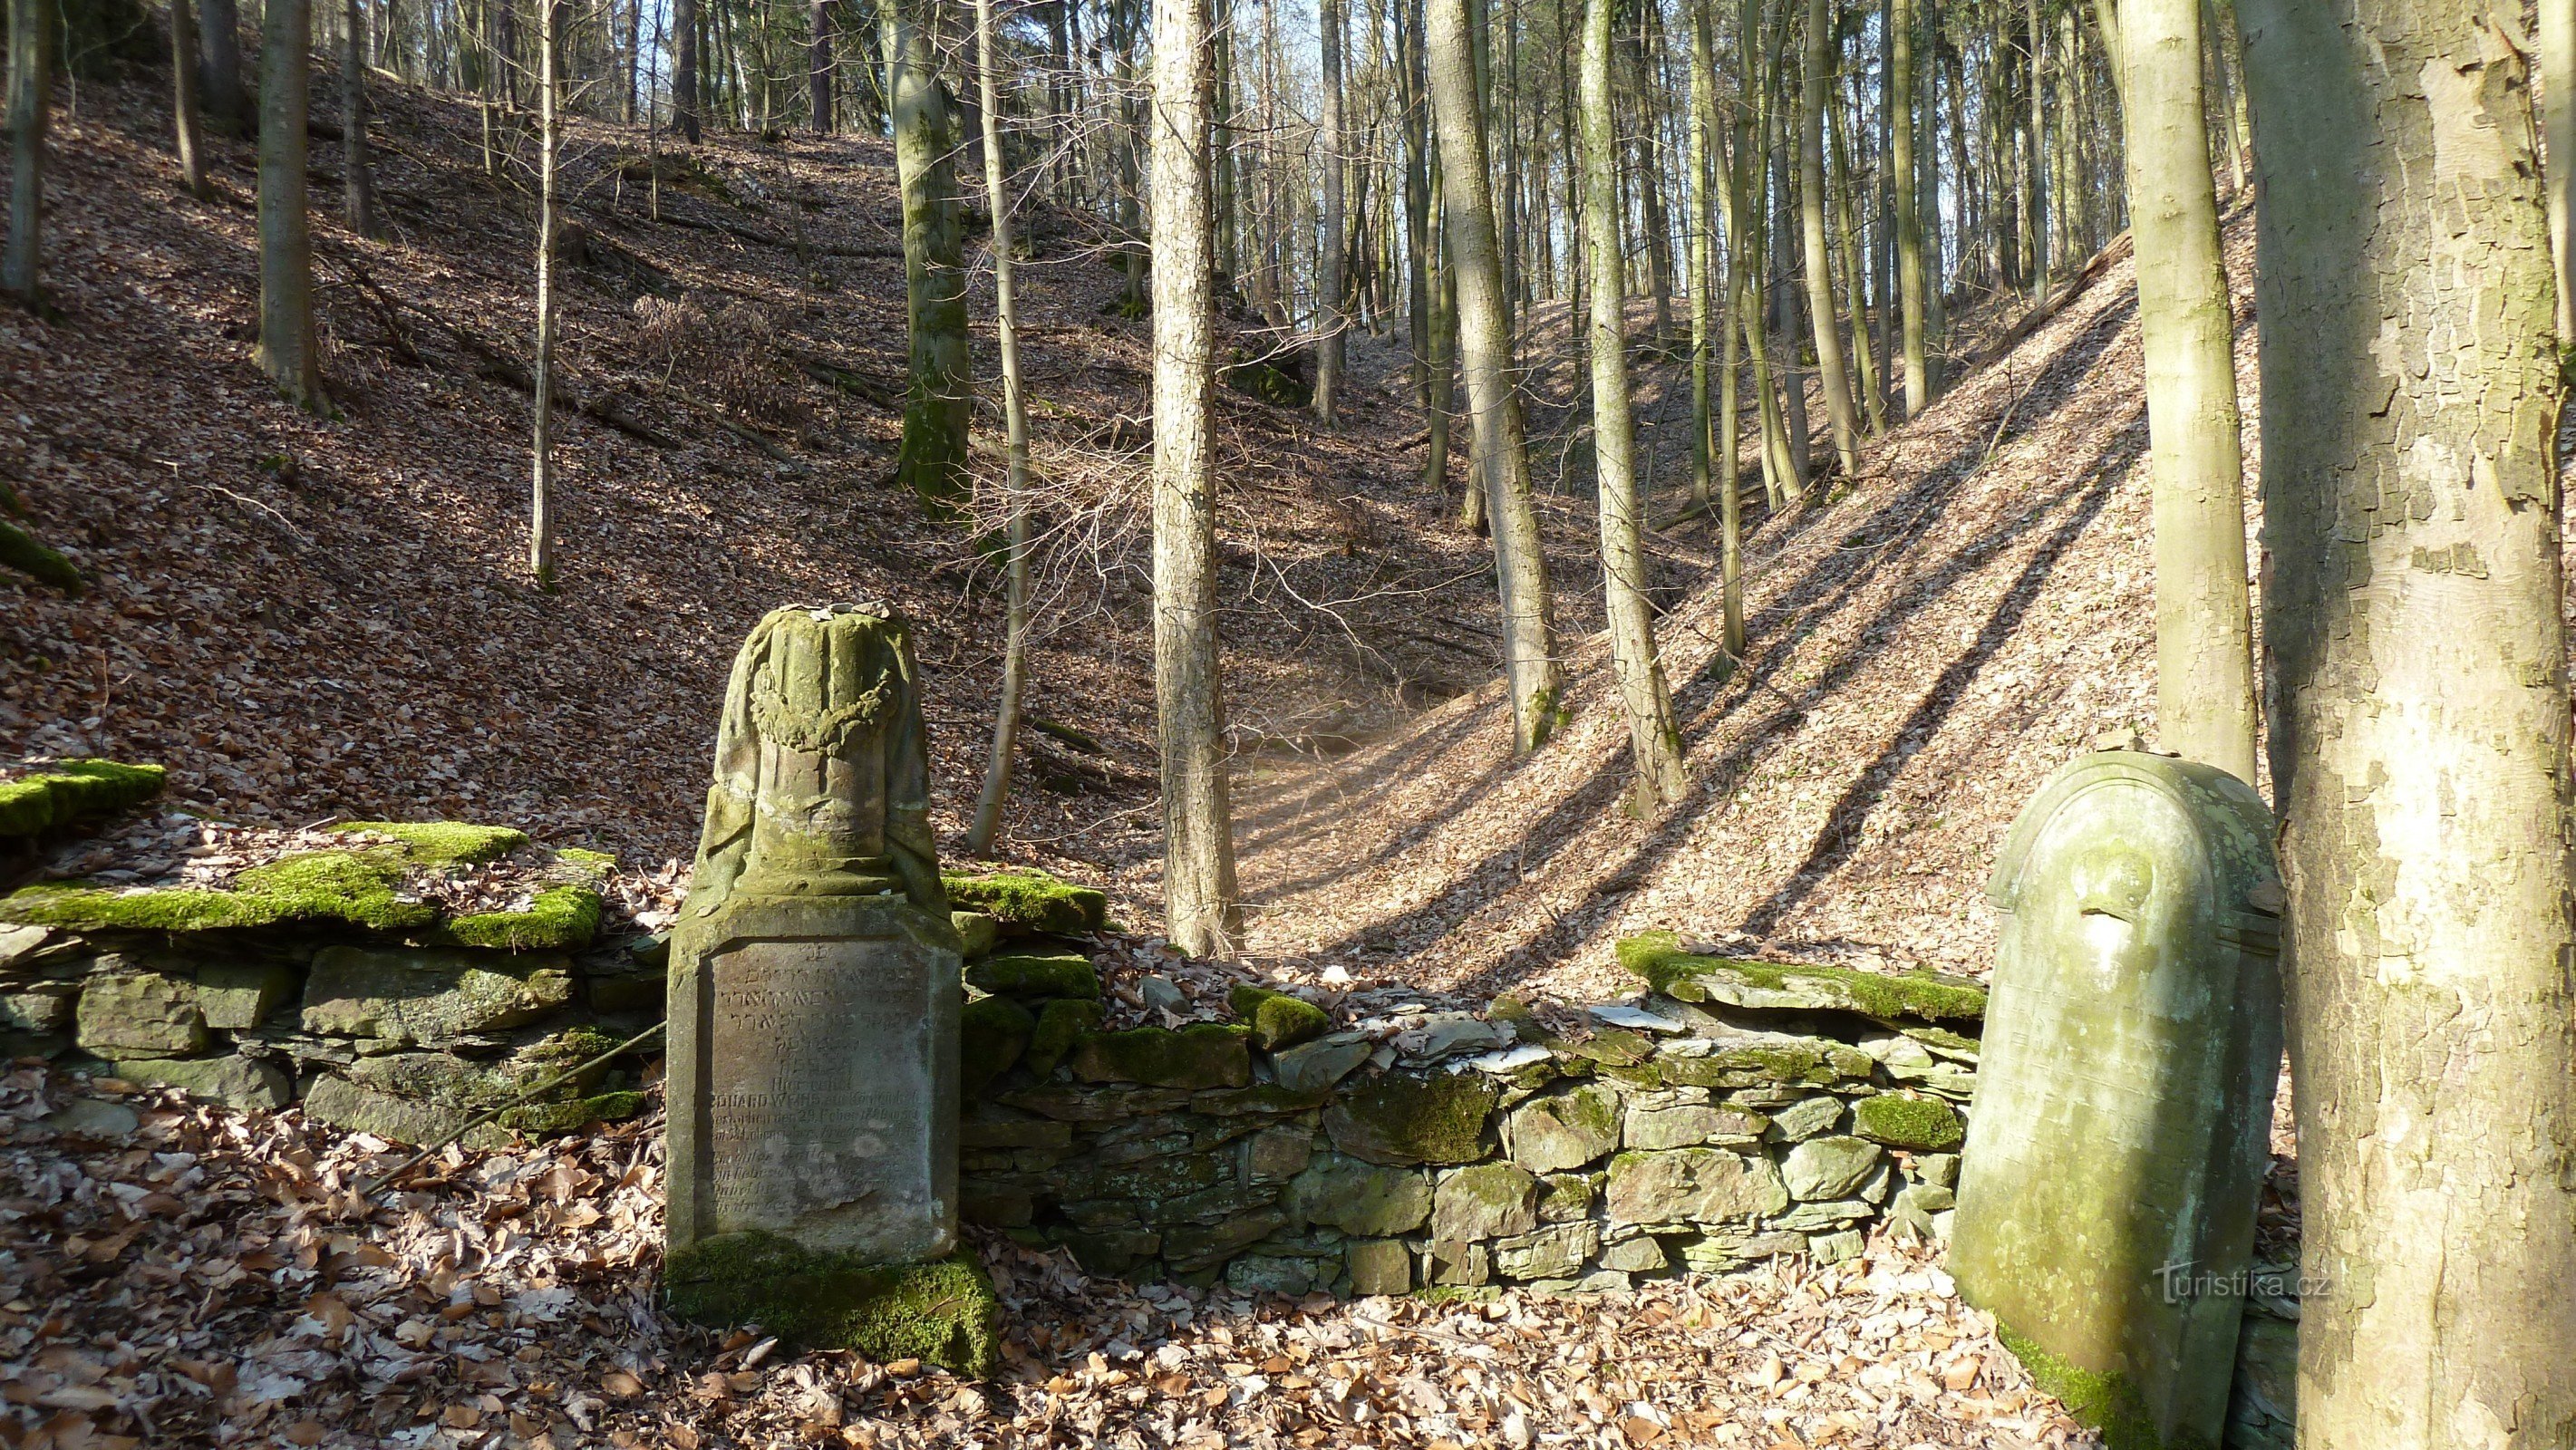 Podbrzezi zsidó temető